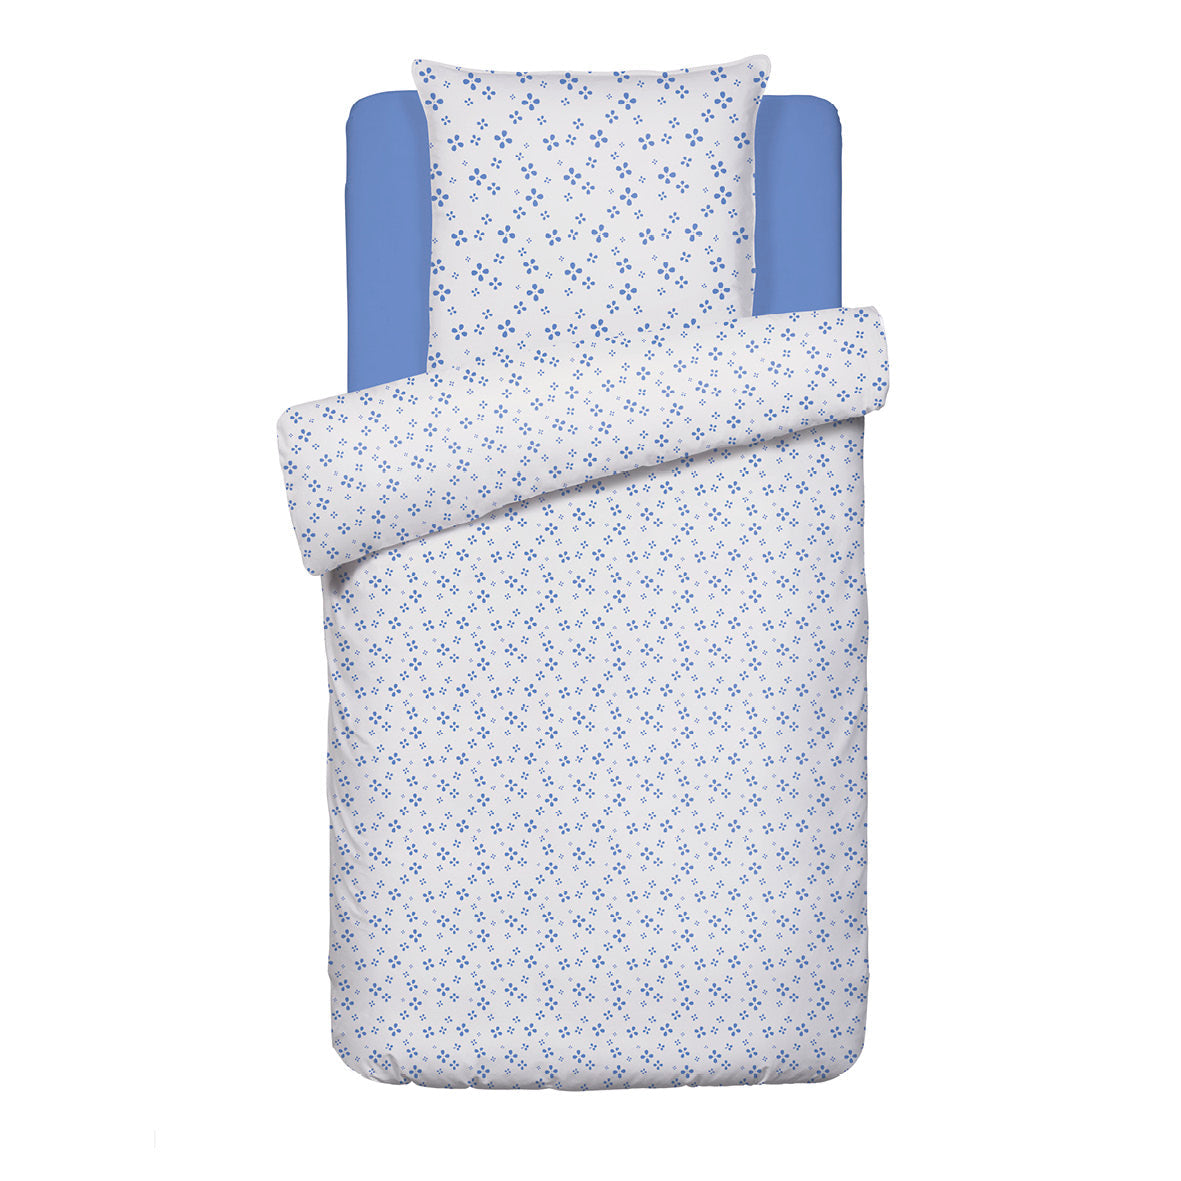 Duvet cover + pillowcase(s) cotton satin - Mirabelle White/blue